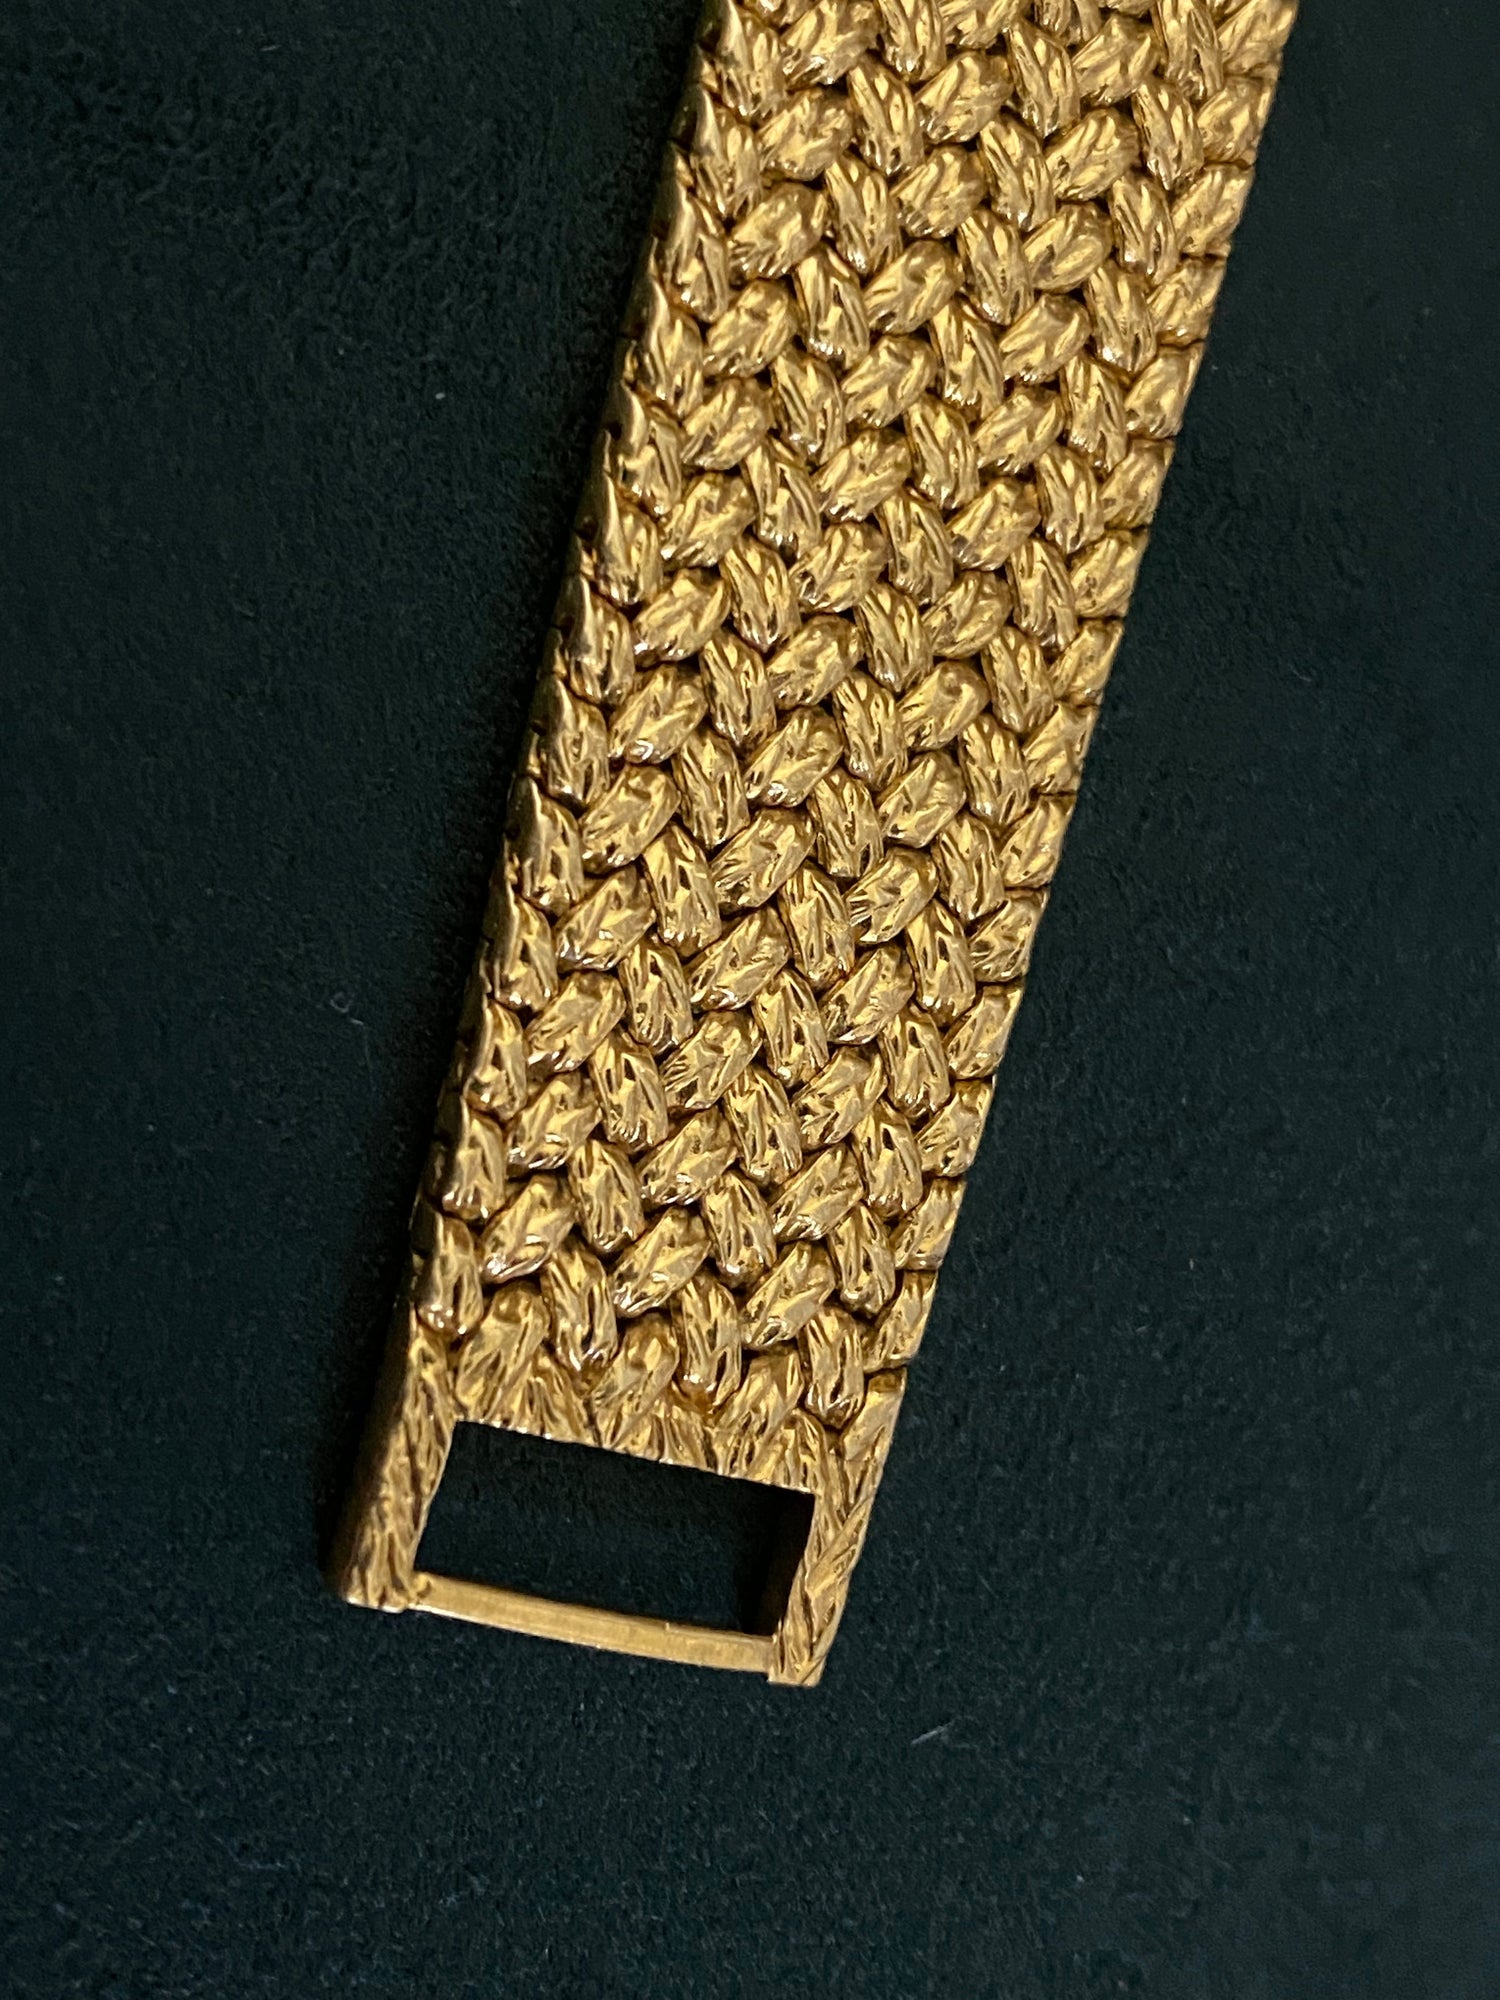 Piaget Vintage Gold Watch Unisex - PM Vintage Watches - Piaget